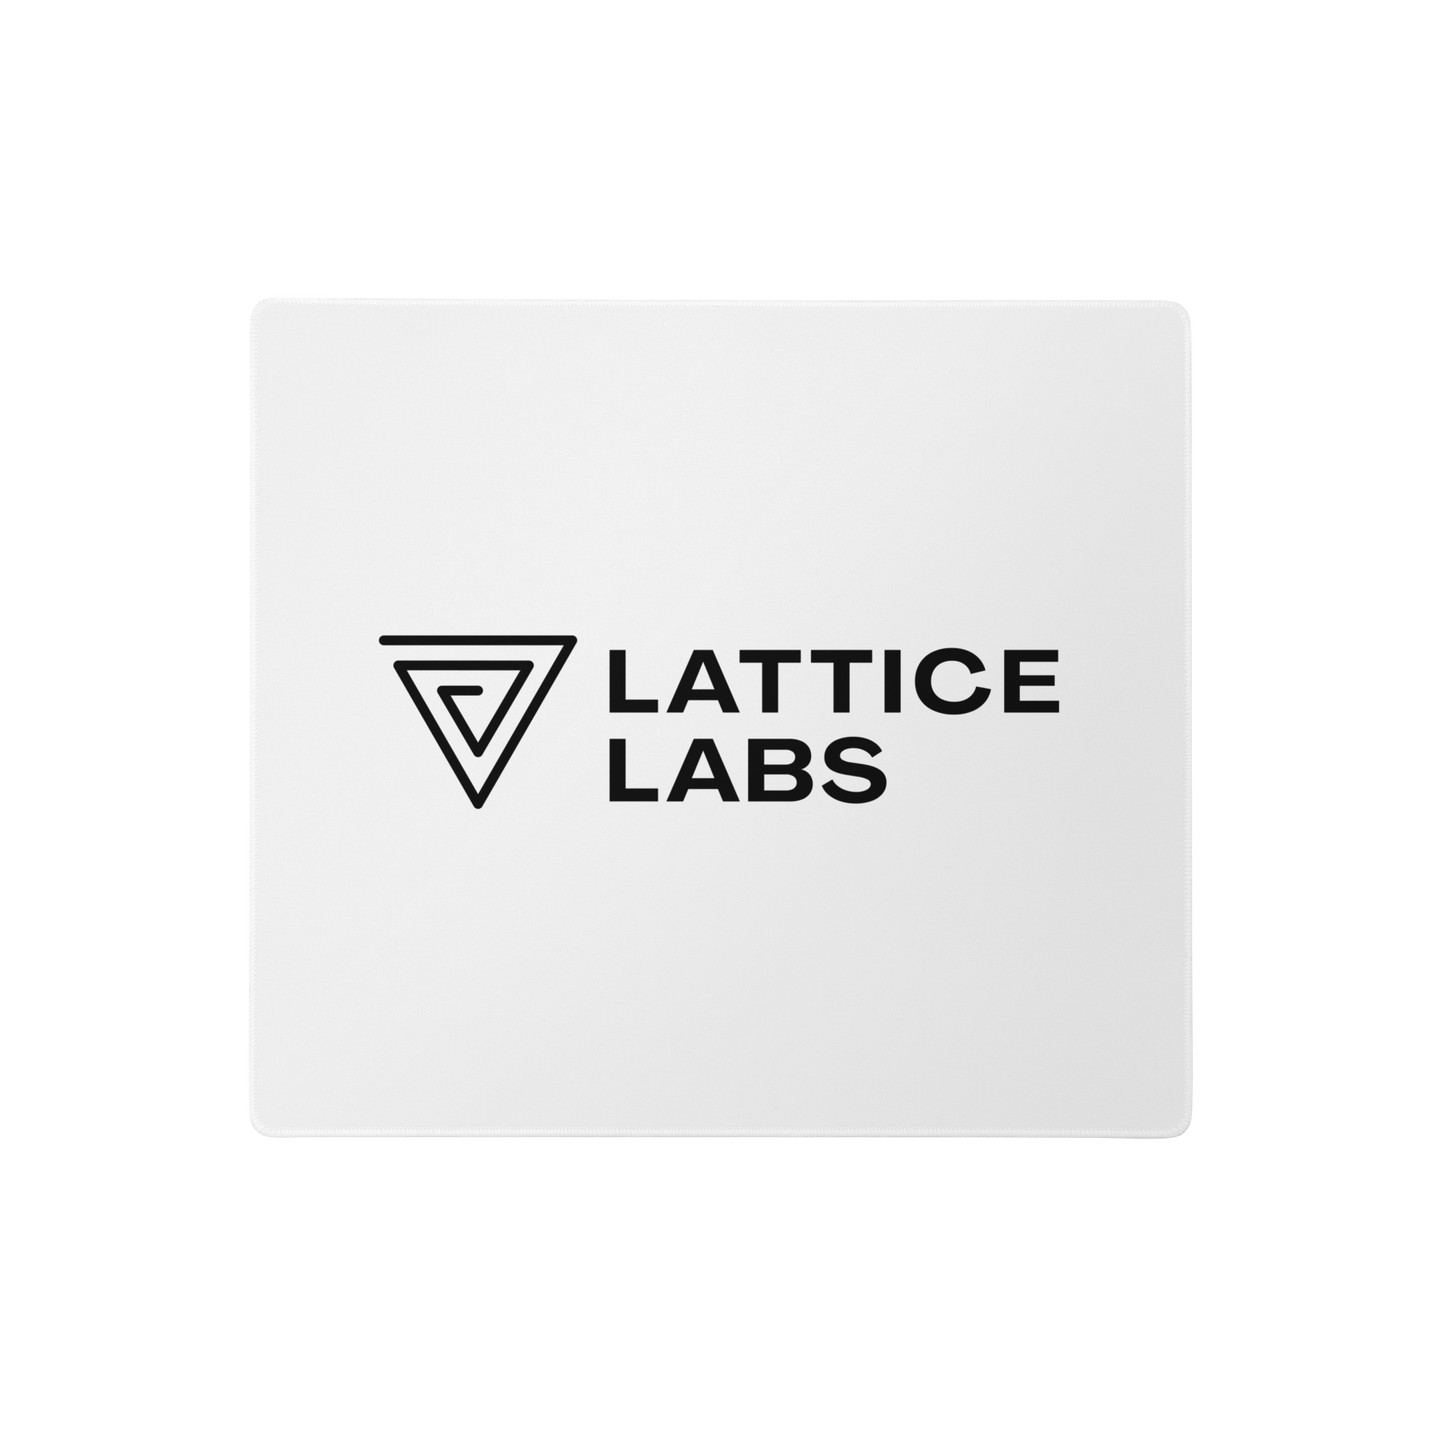 Lattice Labs blockchain developer mouse pad